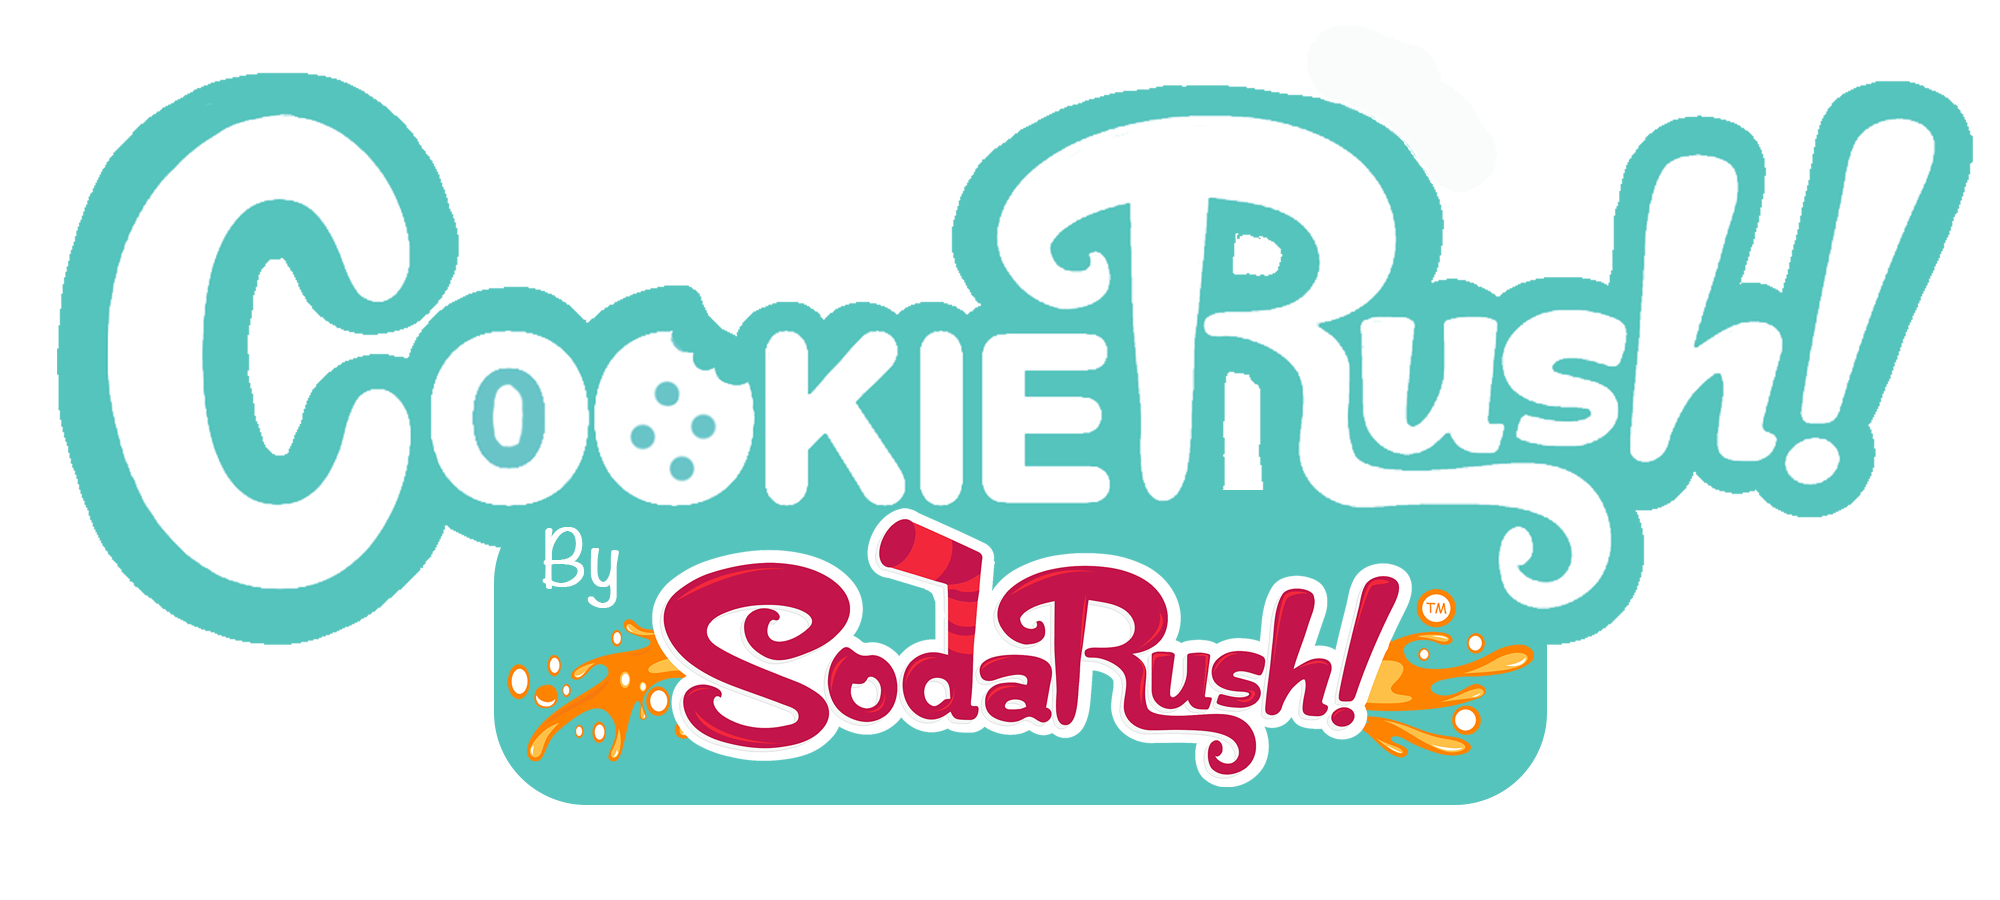 CookieRush! by SodaRush!